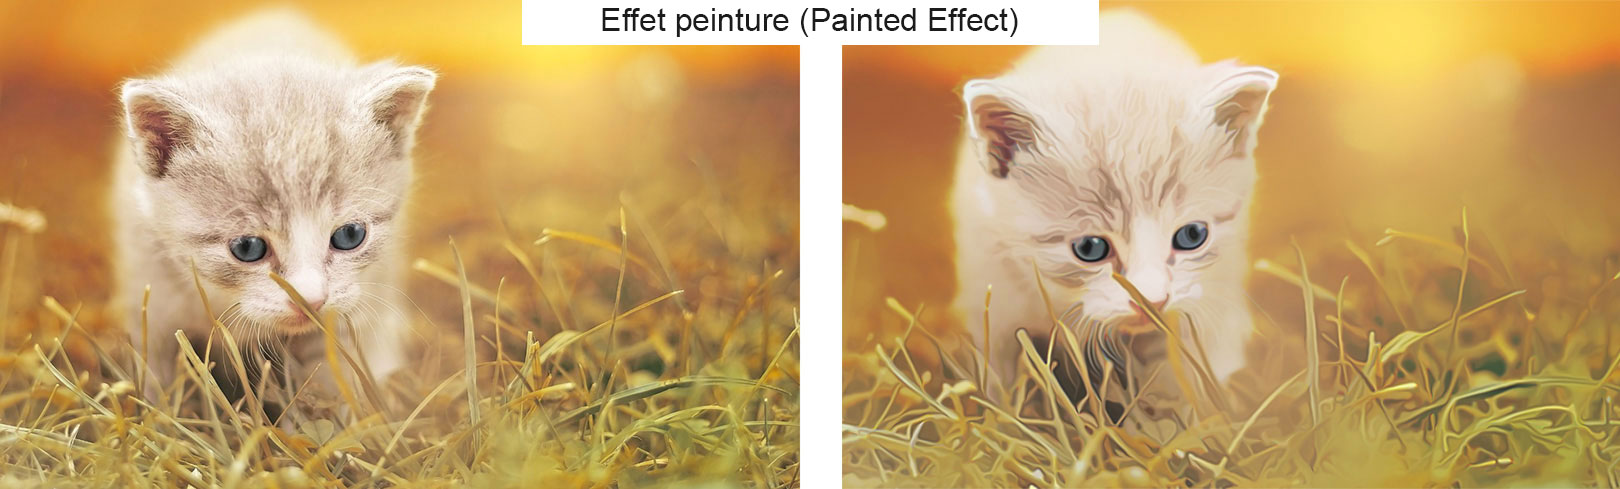 Effet peinture (Painted Effect)